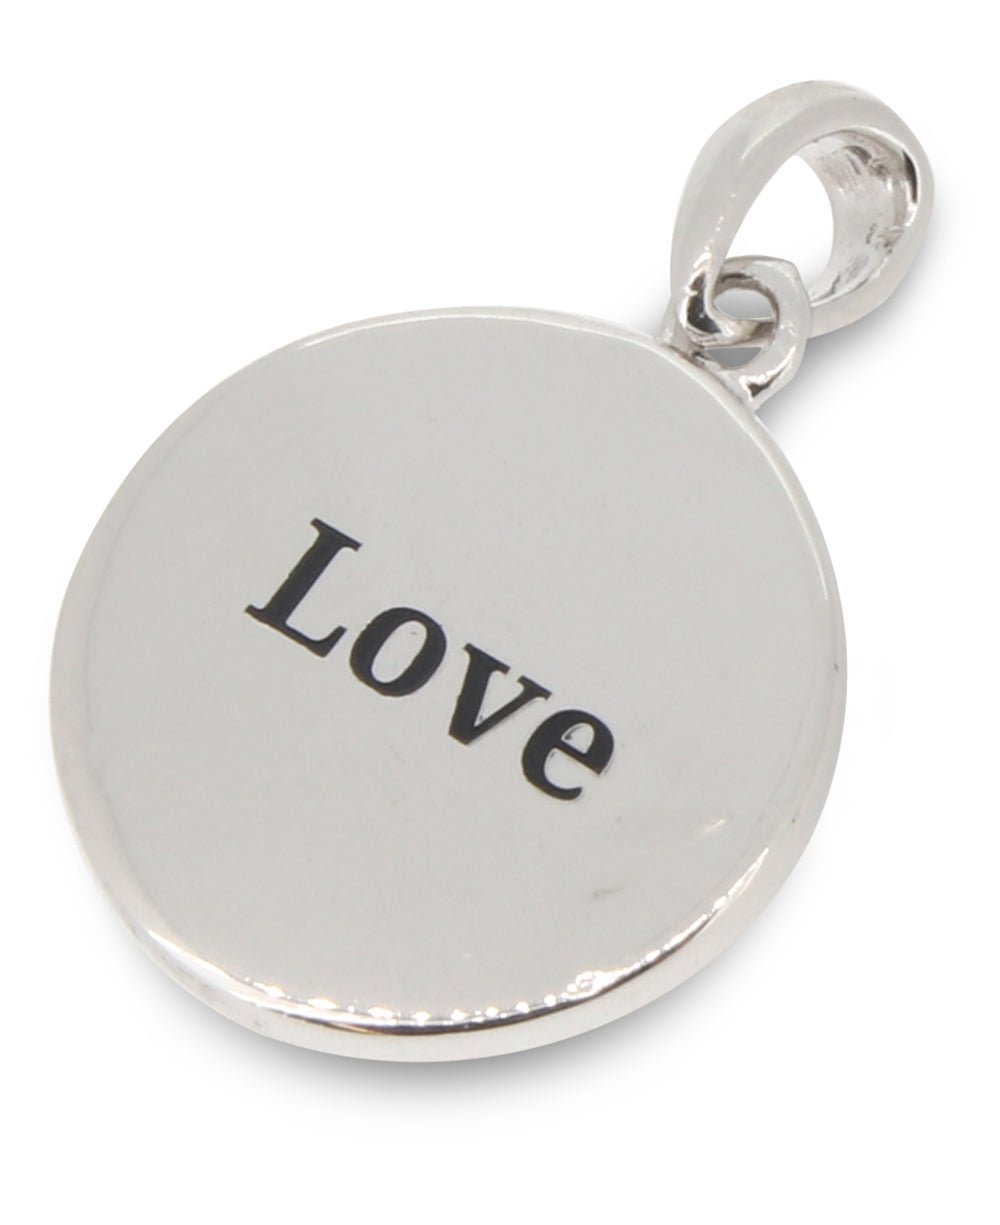 Love Rose Quartz Sterling Silver Pendant - Charms & Pendants